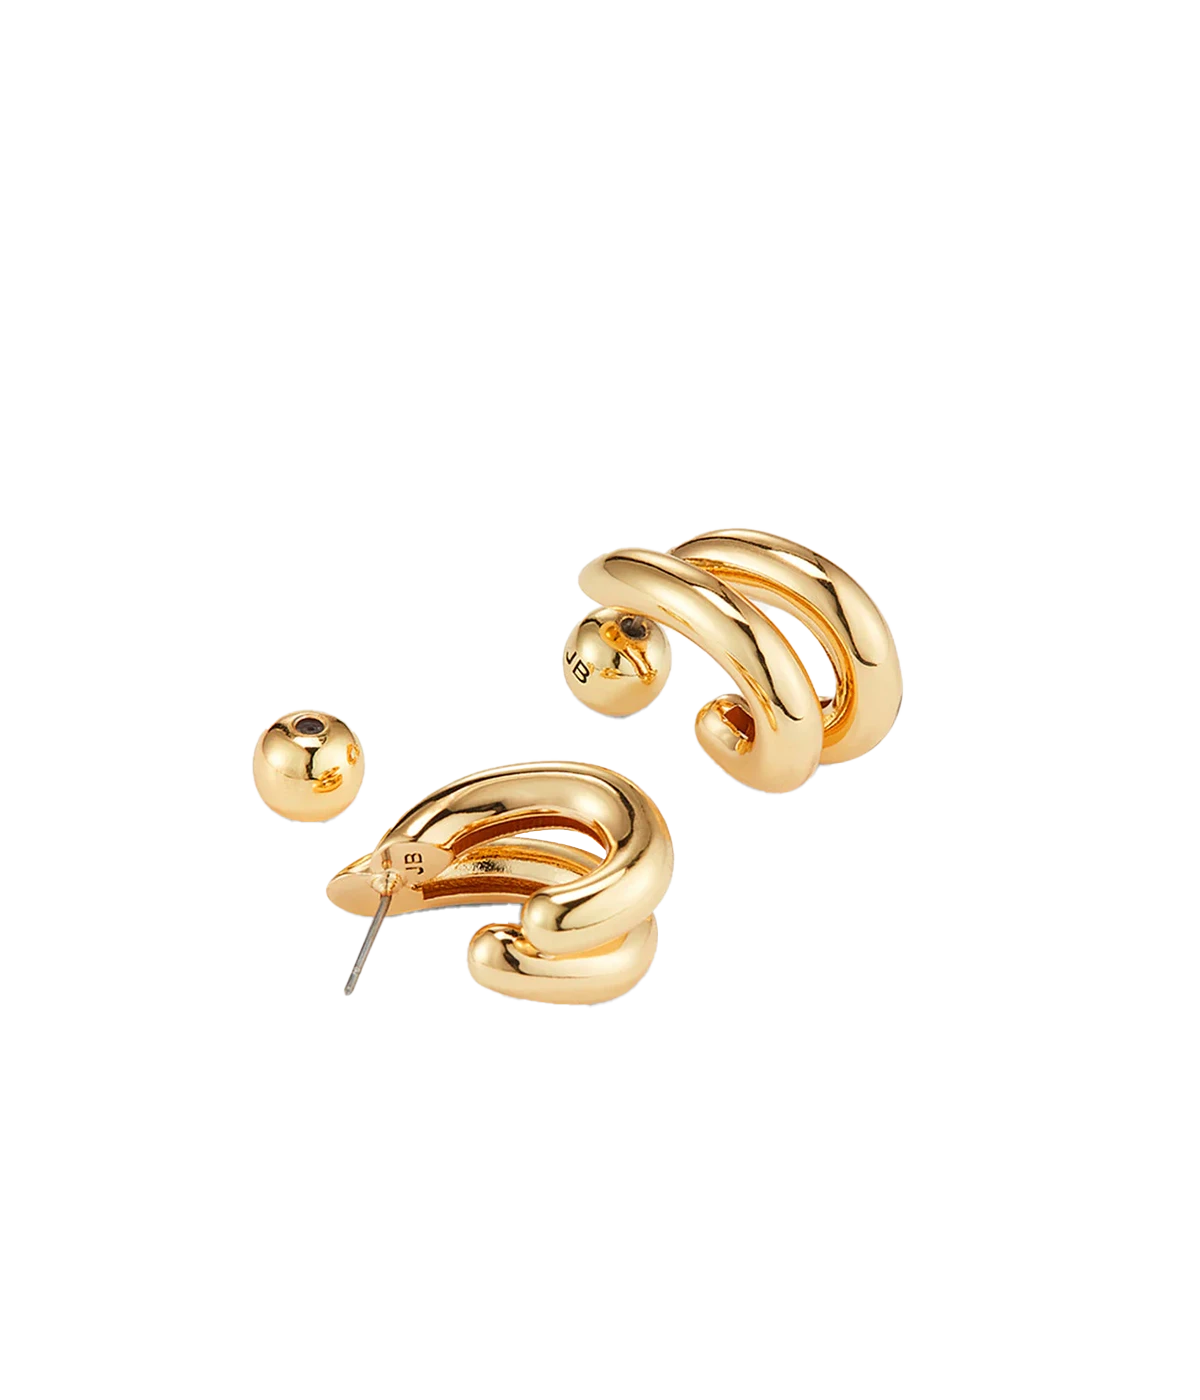 Florene Earrings in Gold